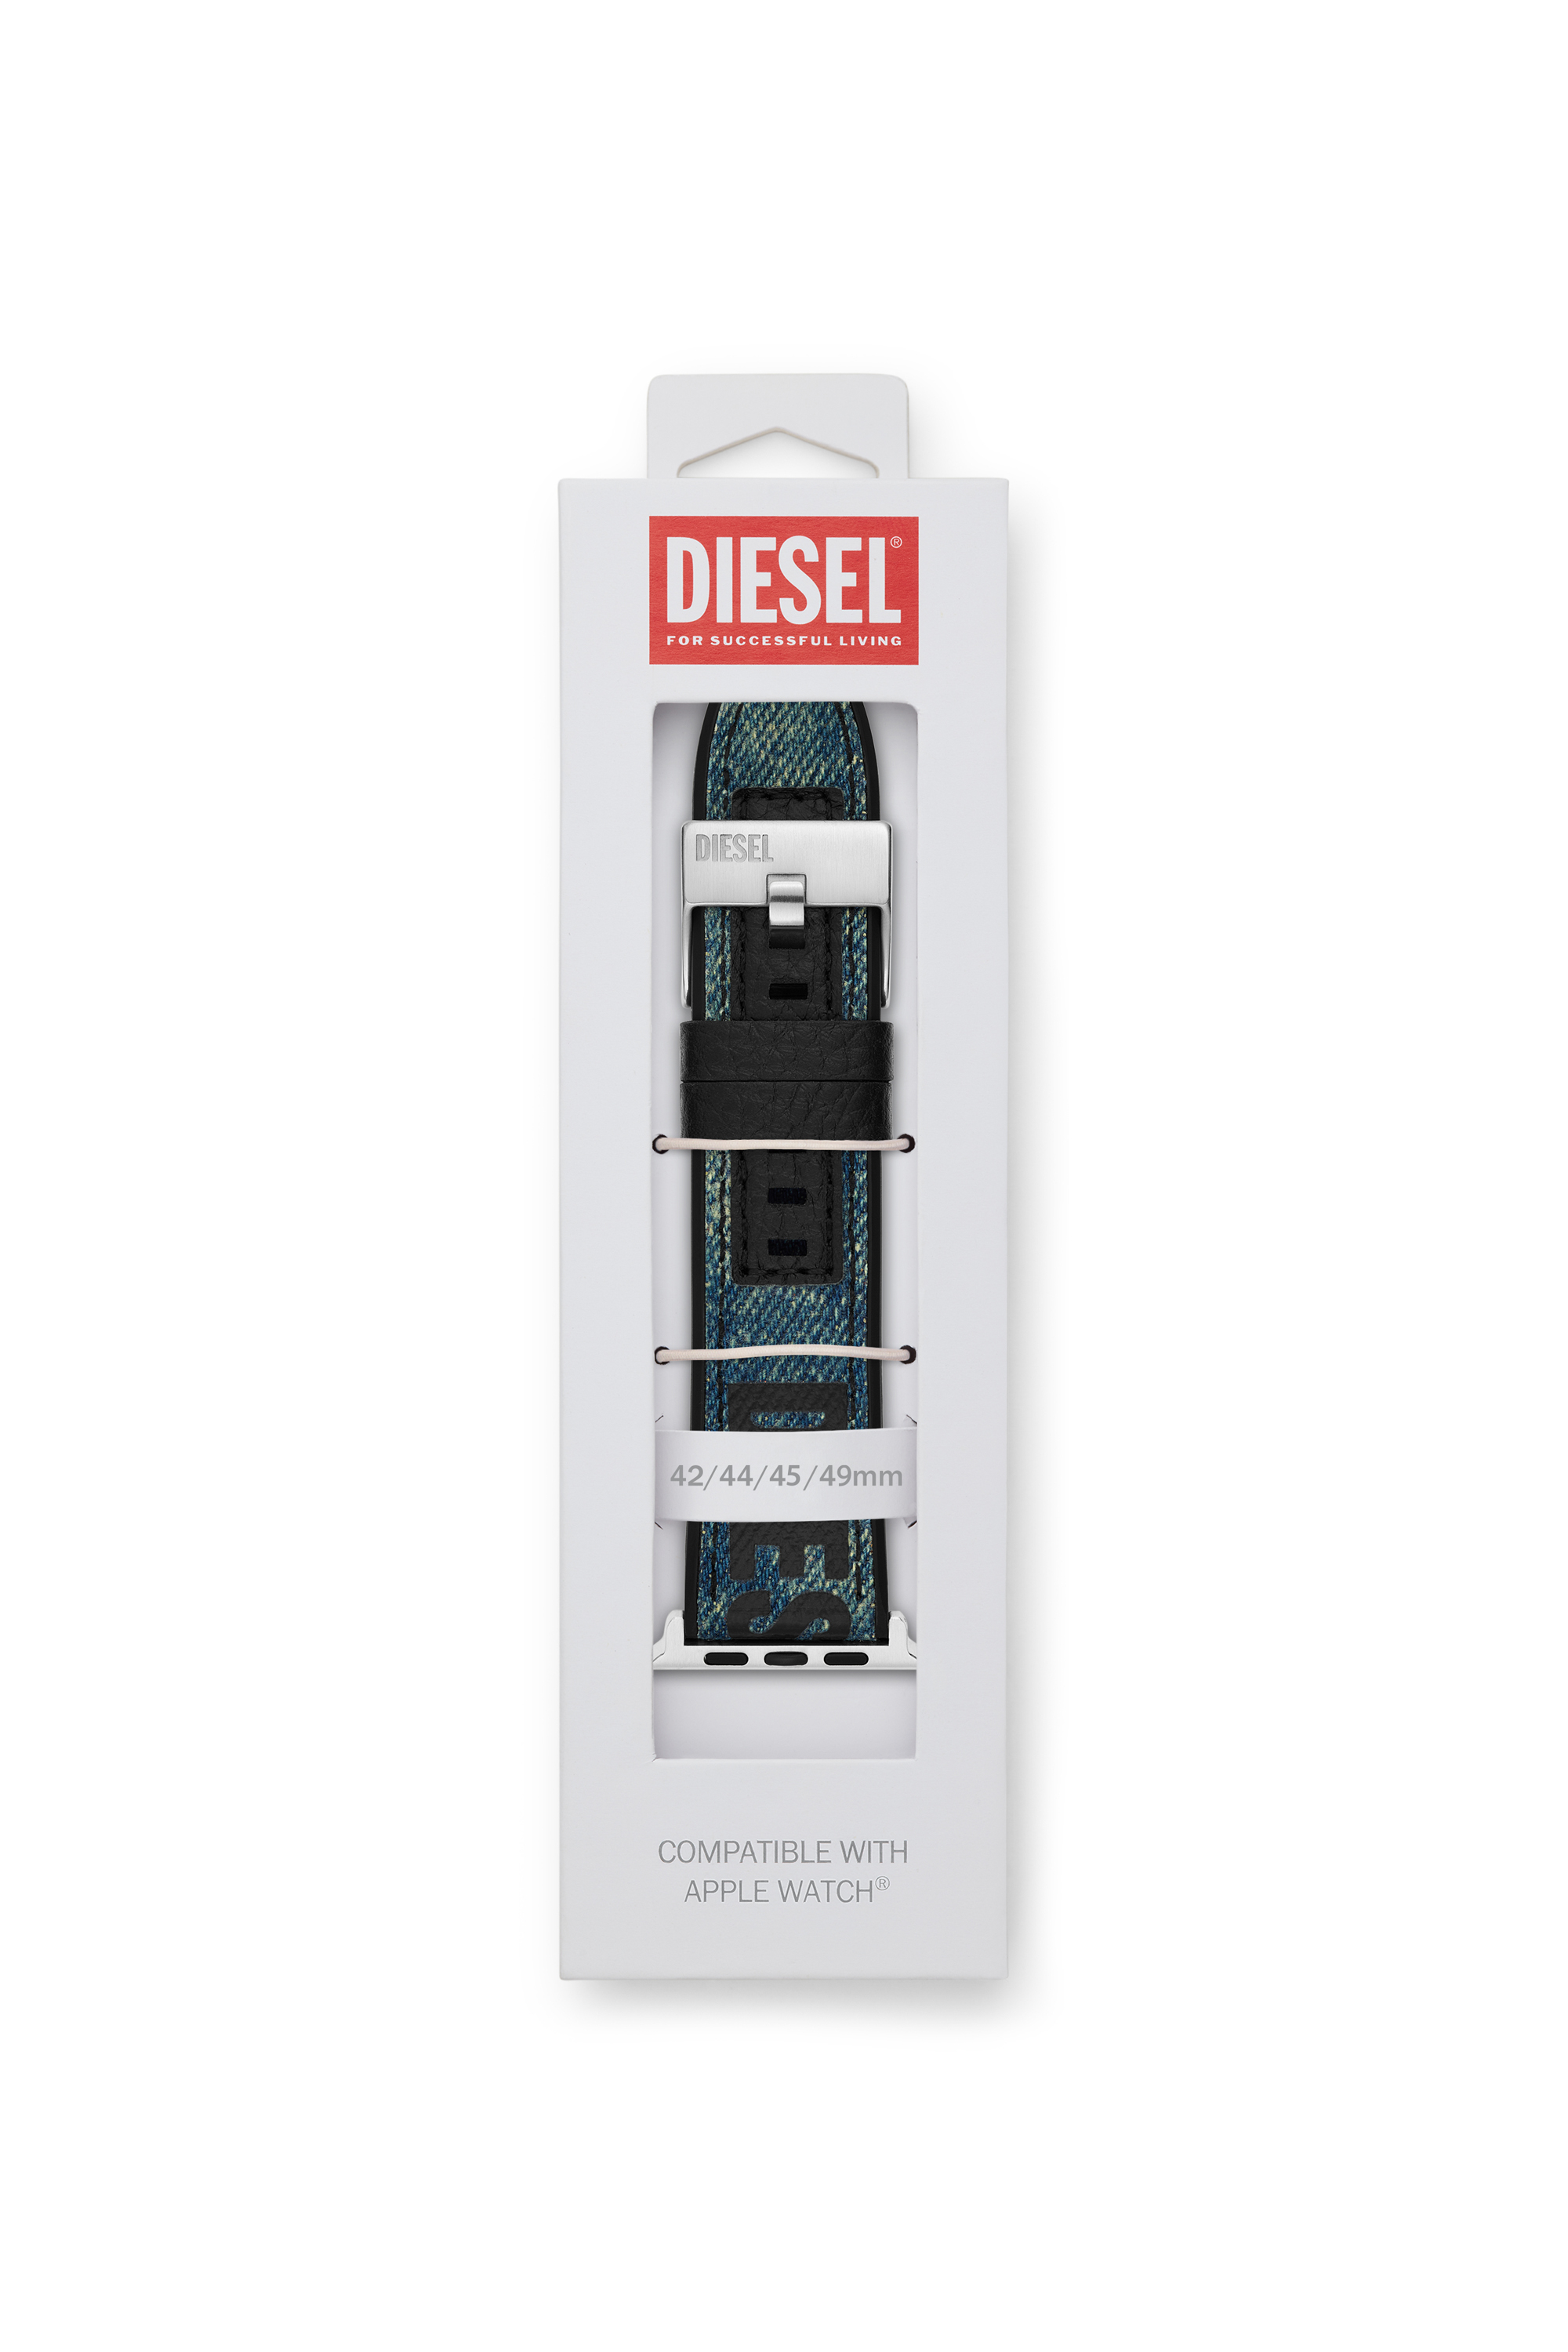 Diesel - DSS0016, ブルー - Image 2